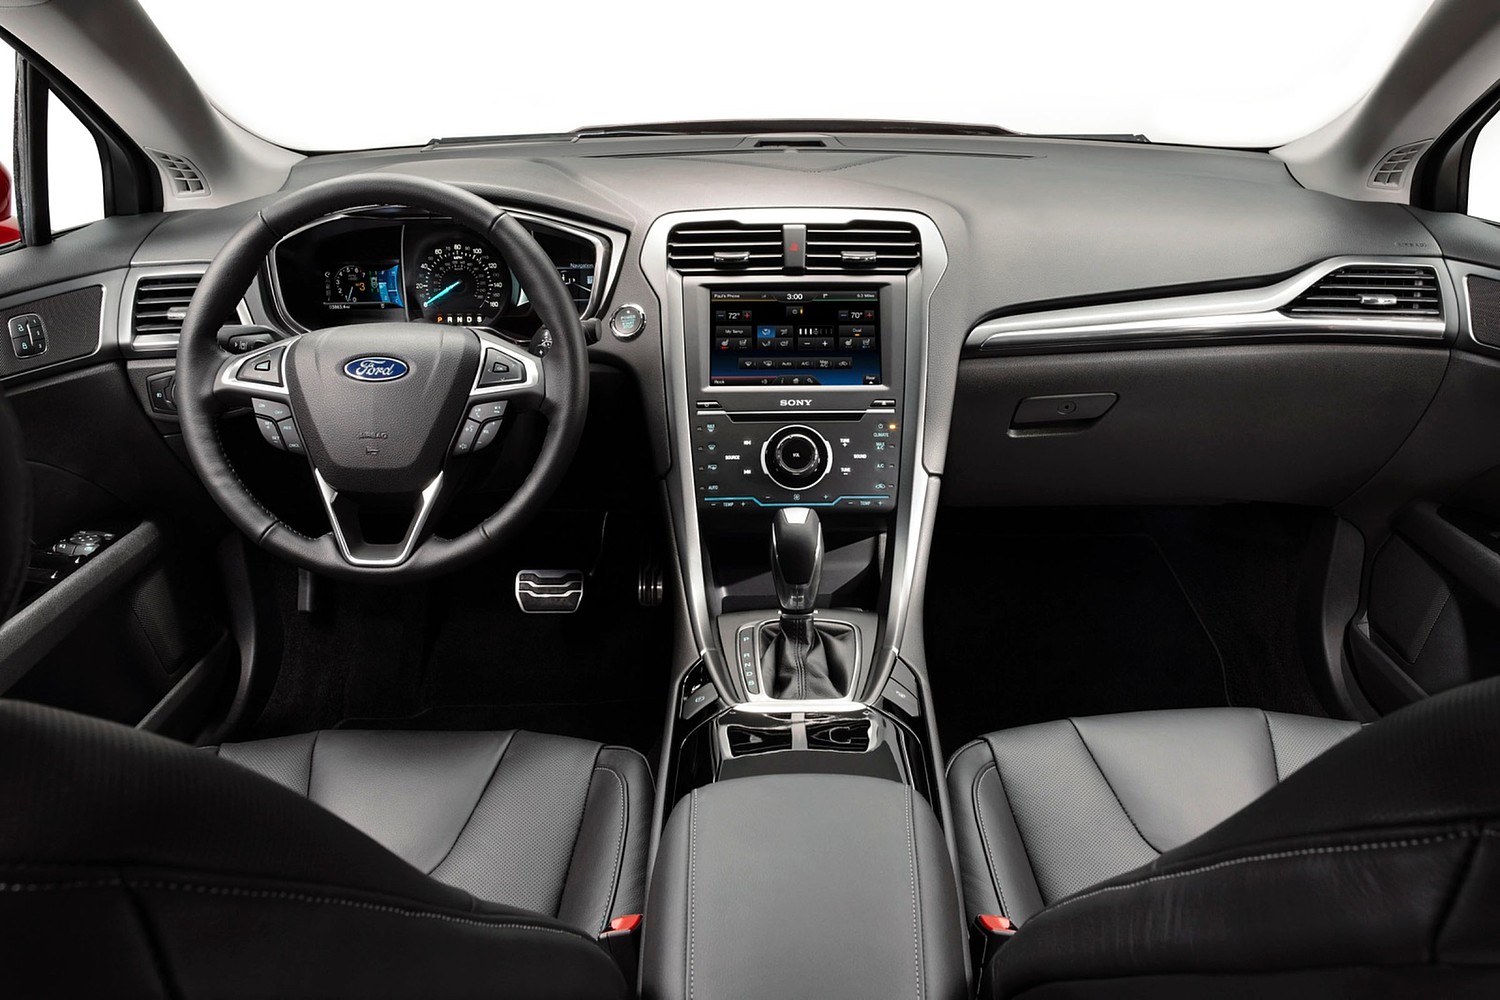 Ford Fusion Titanium Sedan Dashboard (2013 model year shown)